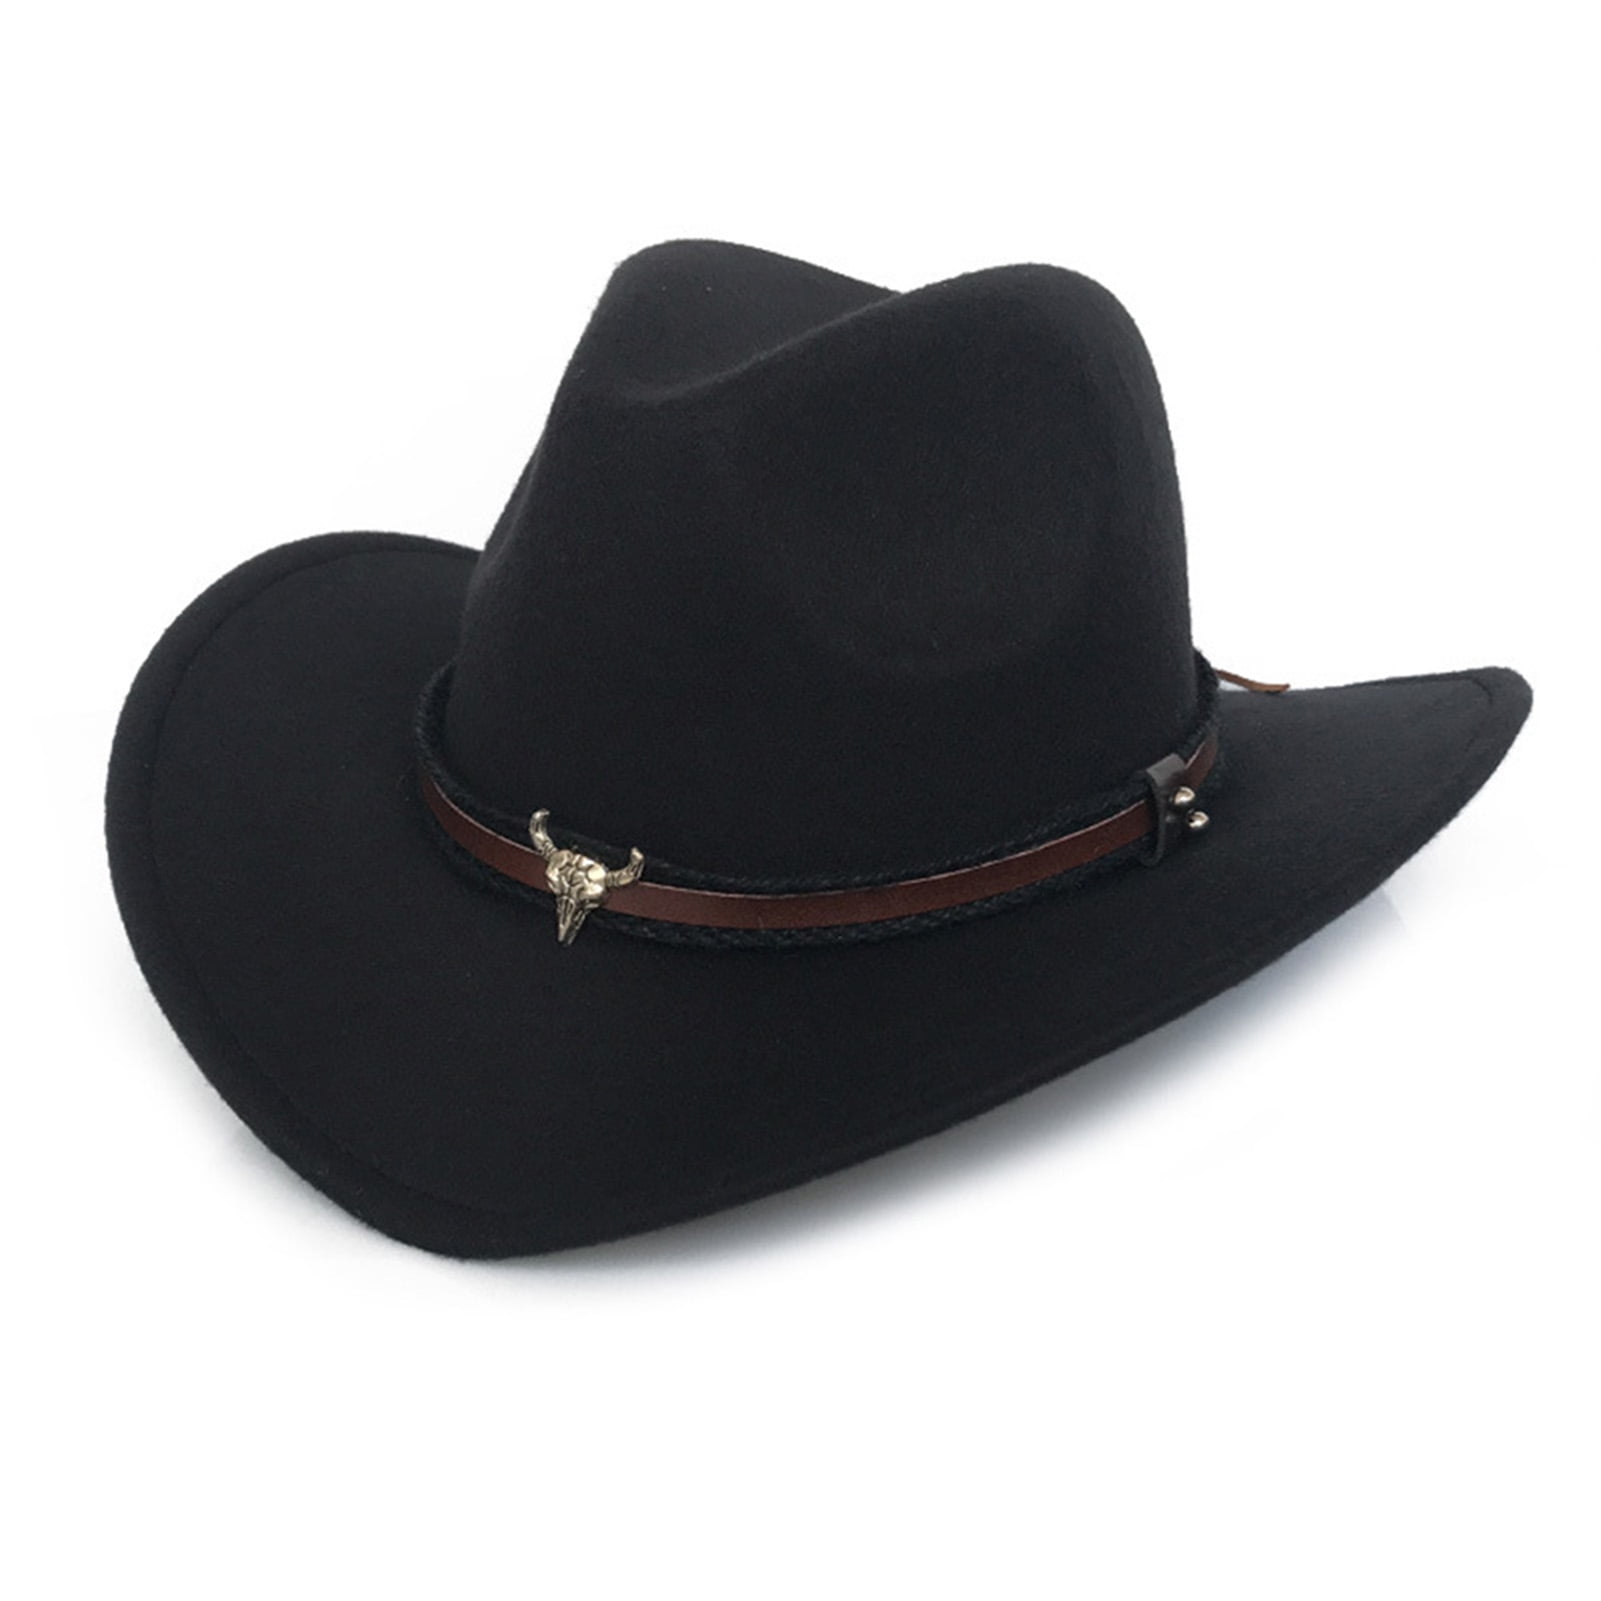 Wide Brim Cowboy Hat One Size Fits Most Adult Men Costume Hats Black Thick Felt 